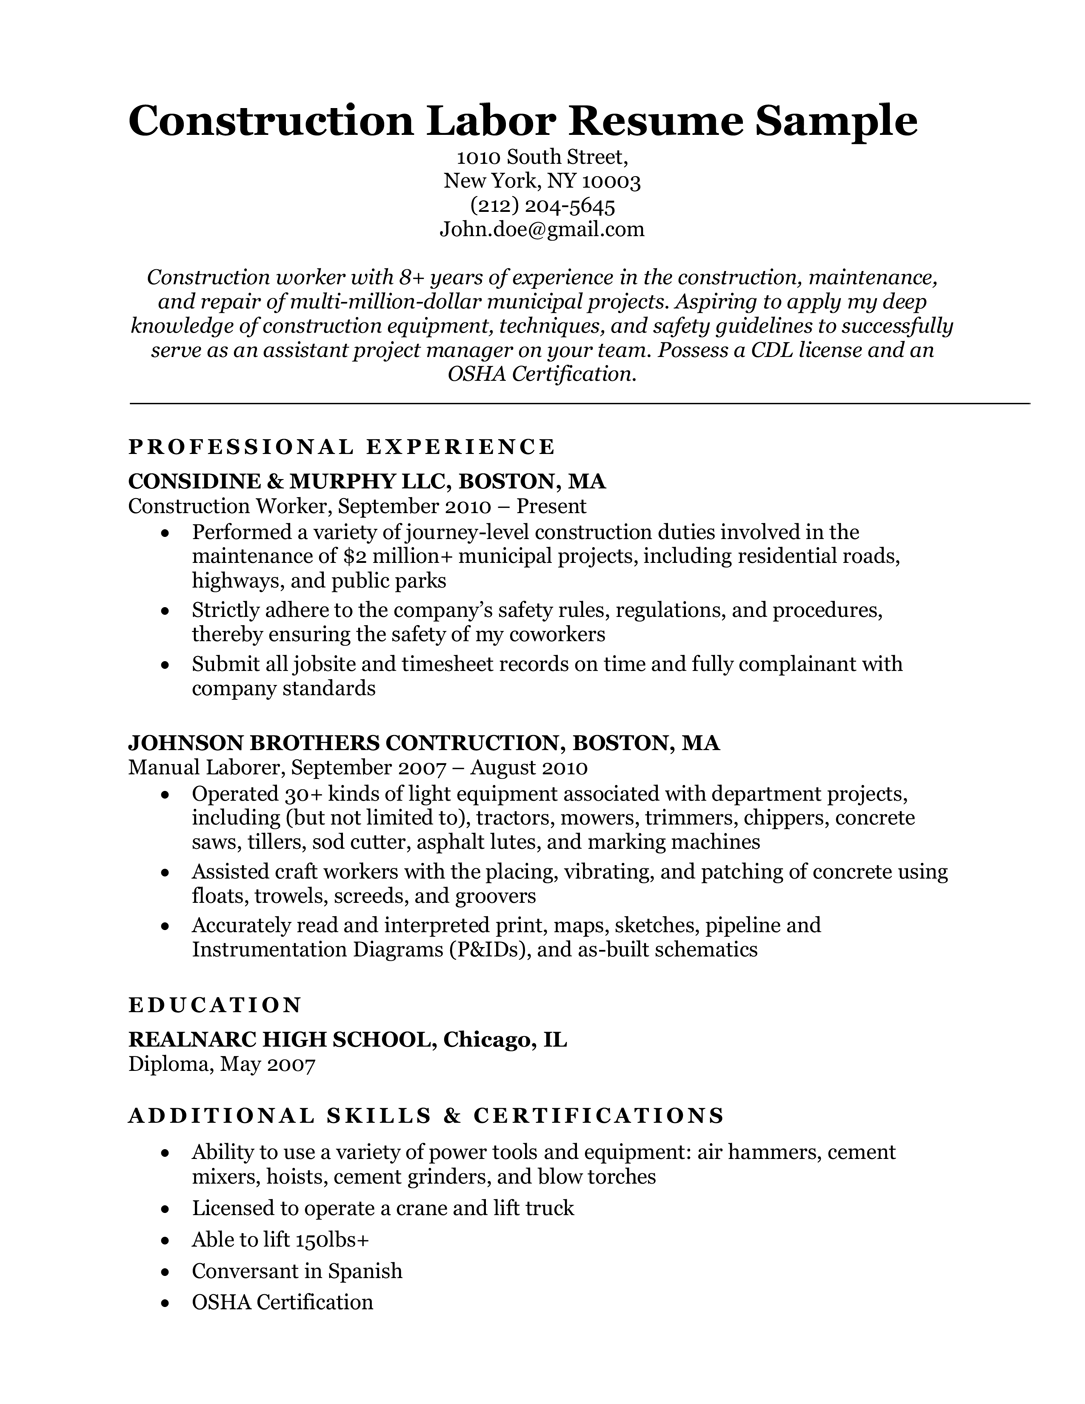 Construction & labor resume sample